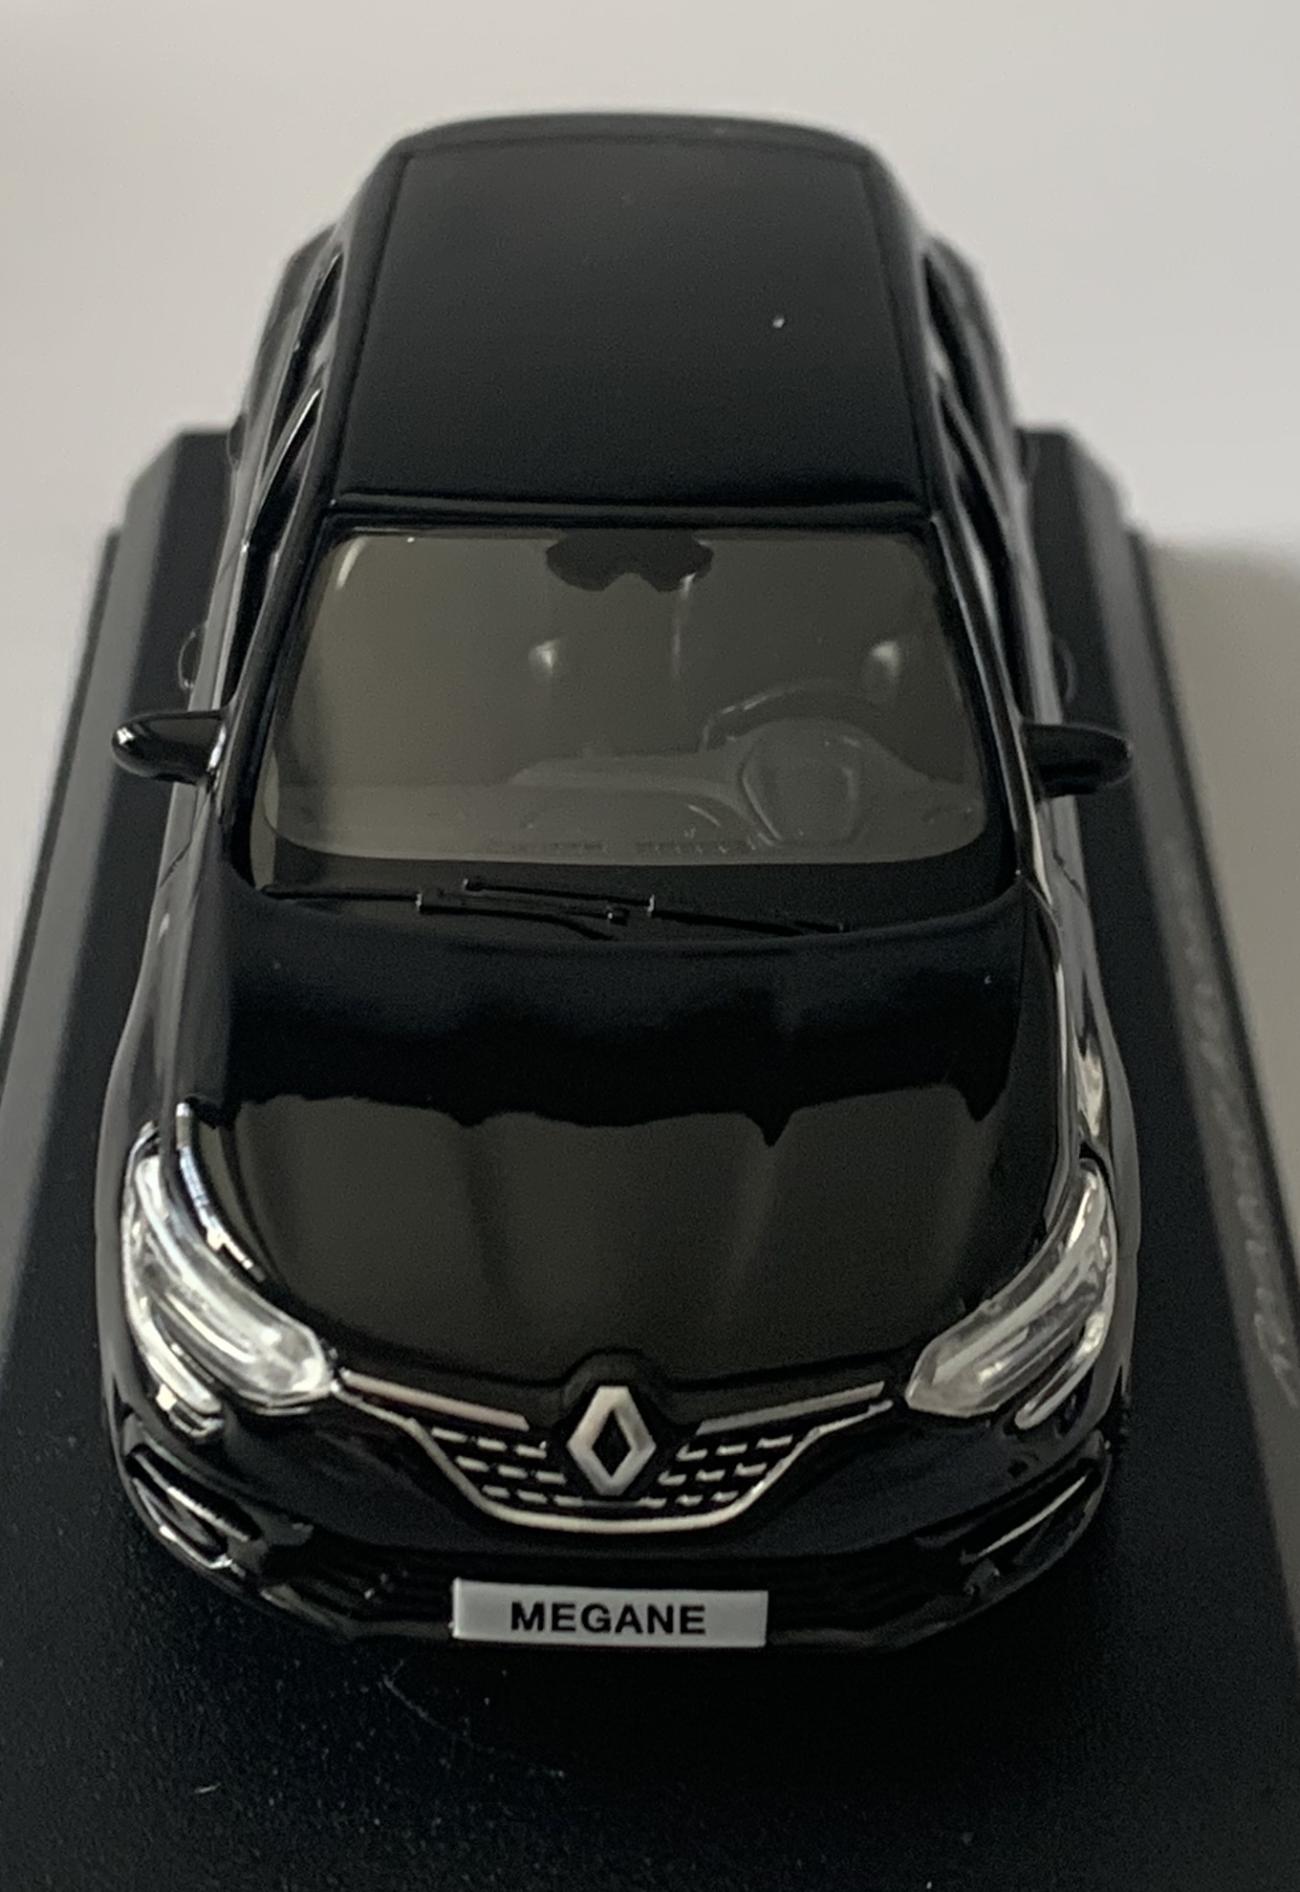 Renault Megane 2020 in black 1:43 scale diecast model from Norev, 517674